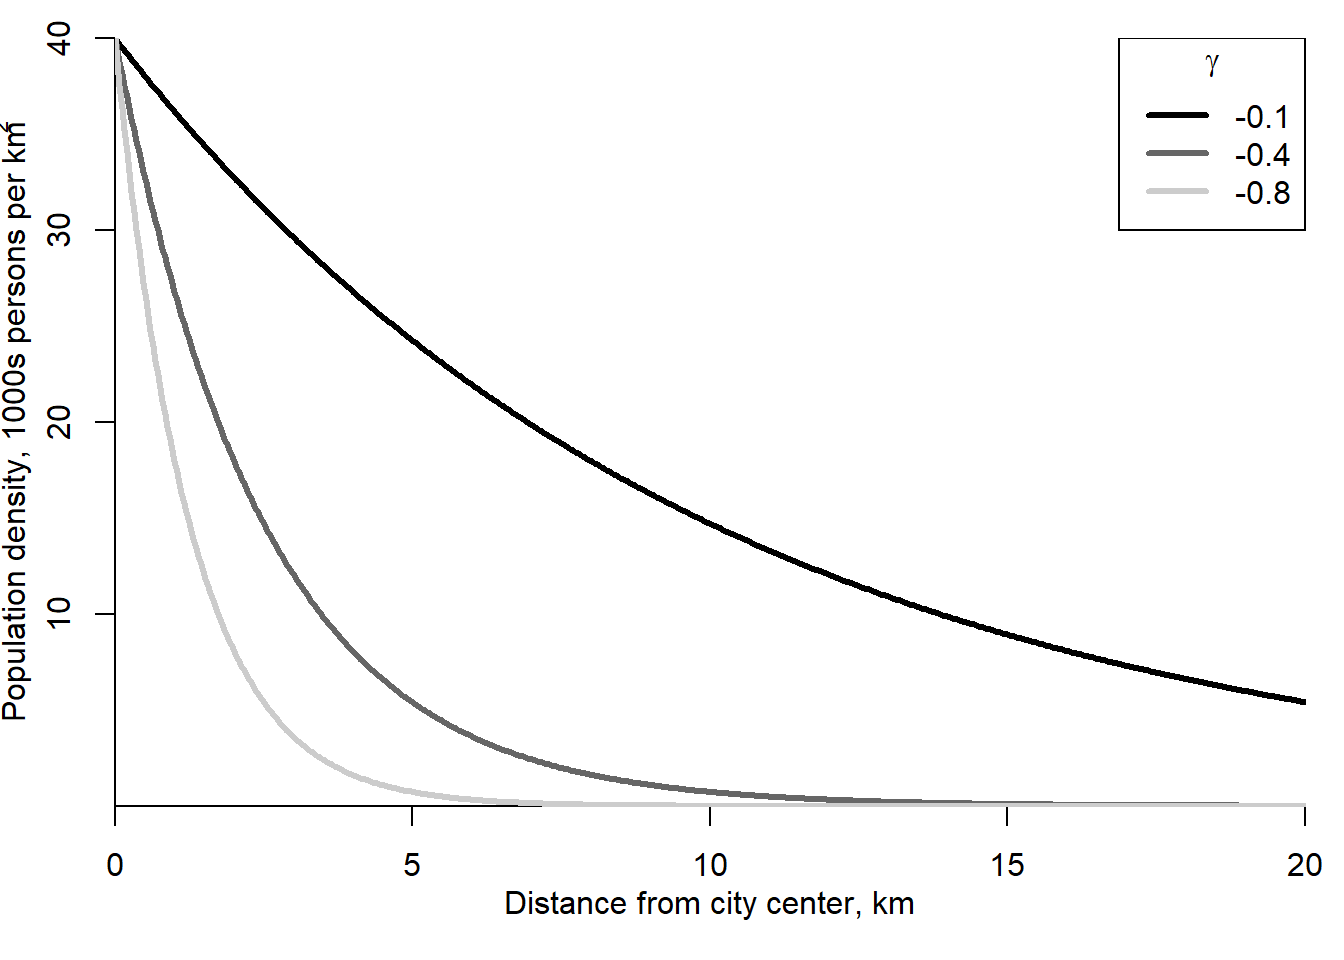 Alternative stylized population density gradients